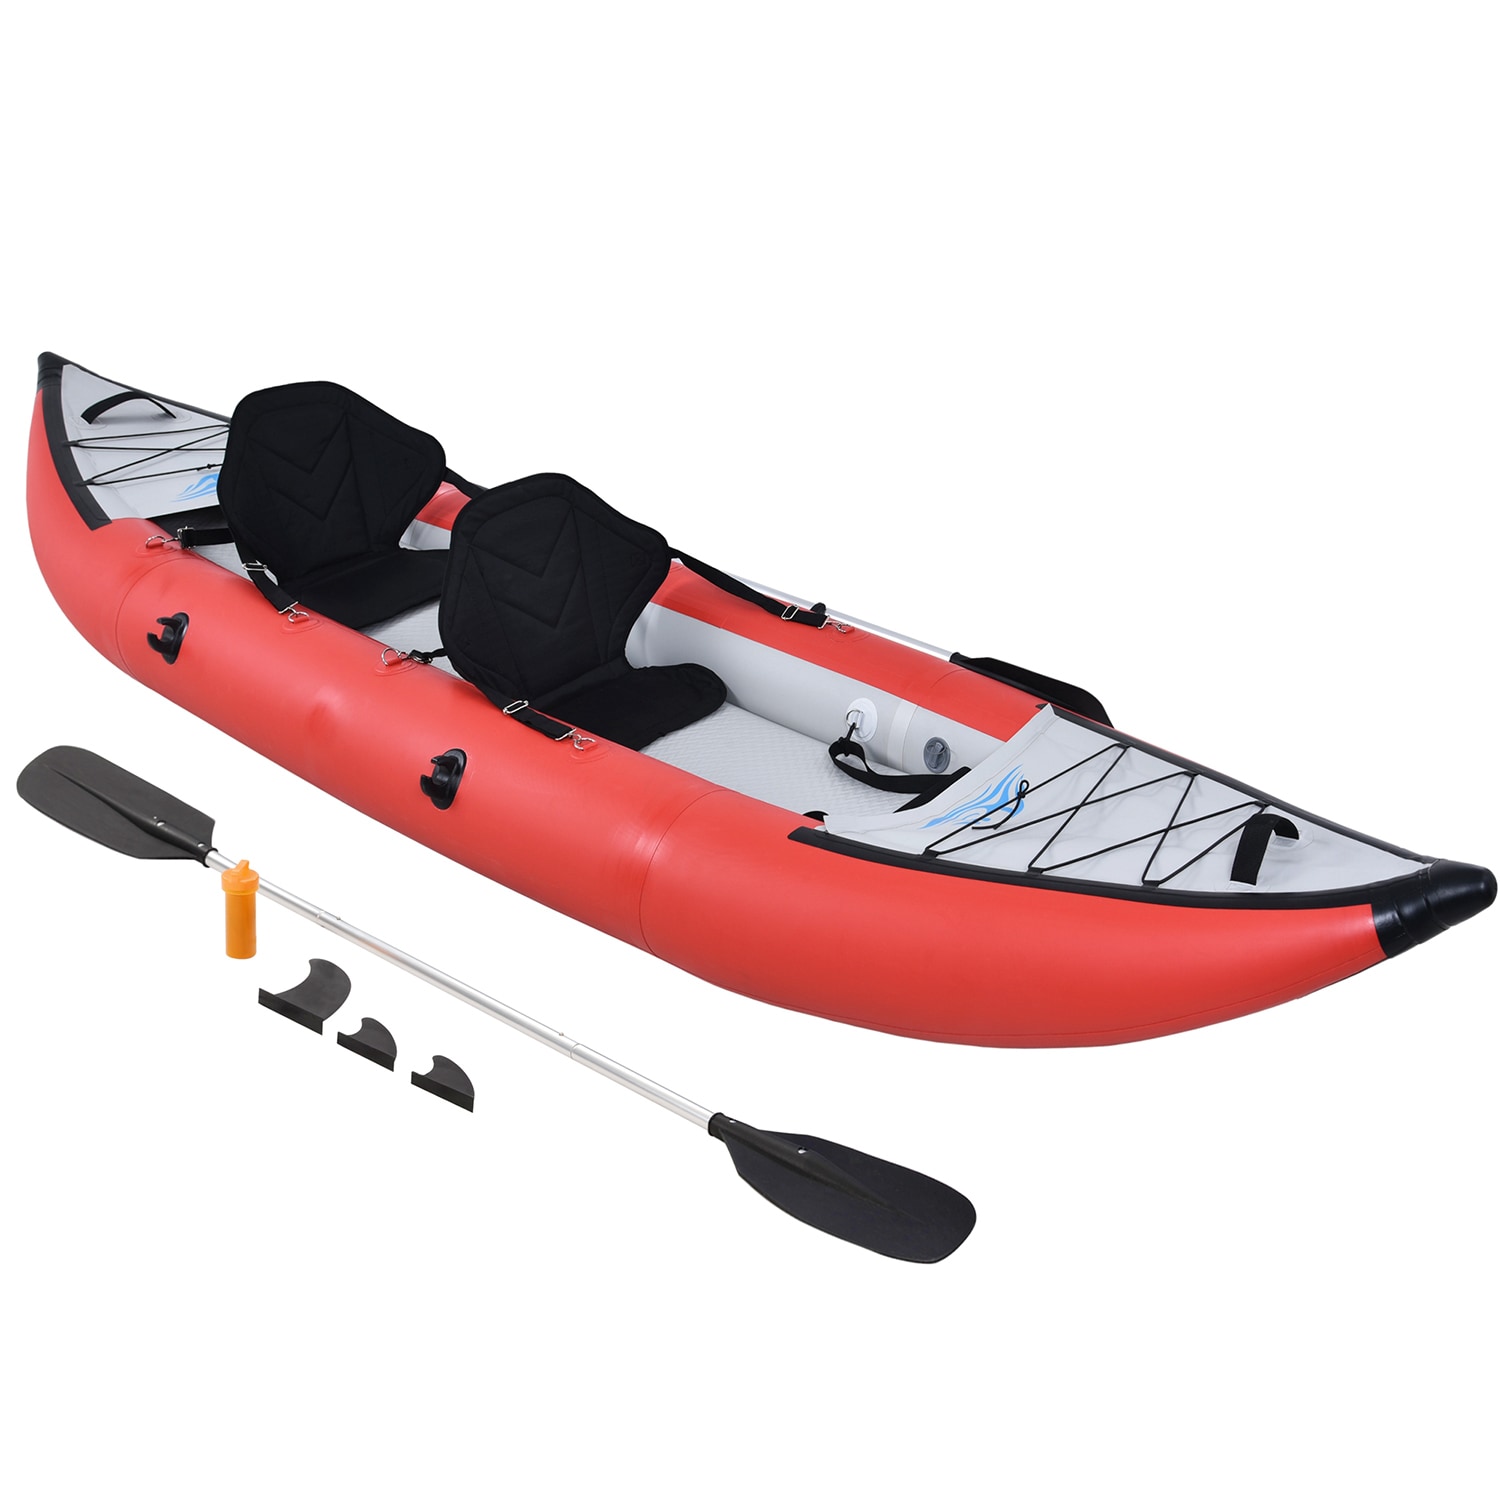 SINOFURN Inflatable Kayak Set with Paddle and Air Pump, Portable